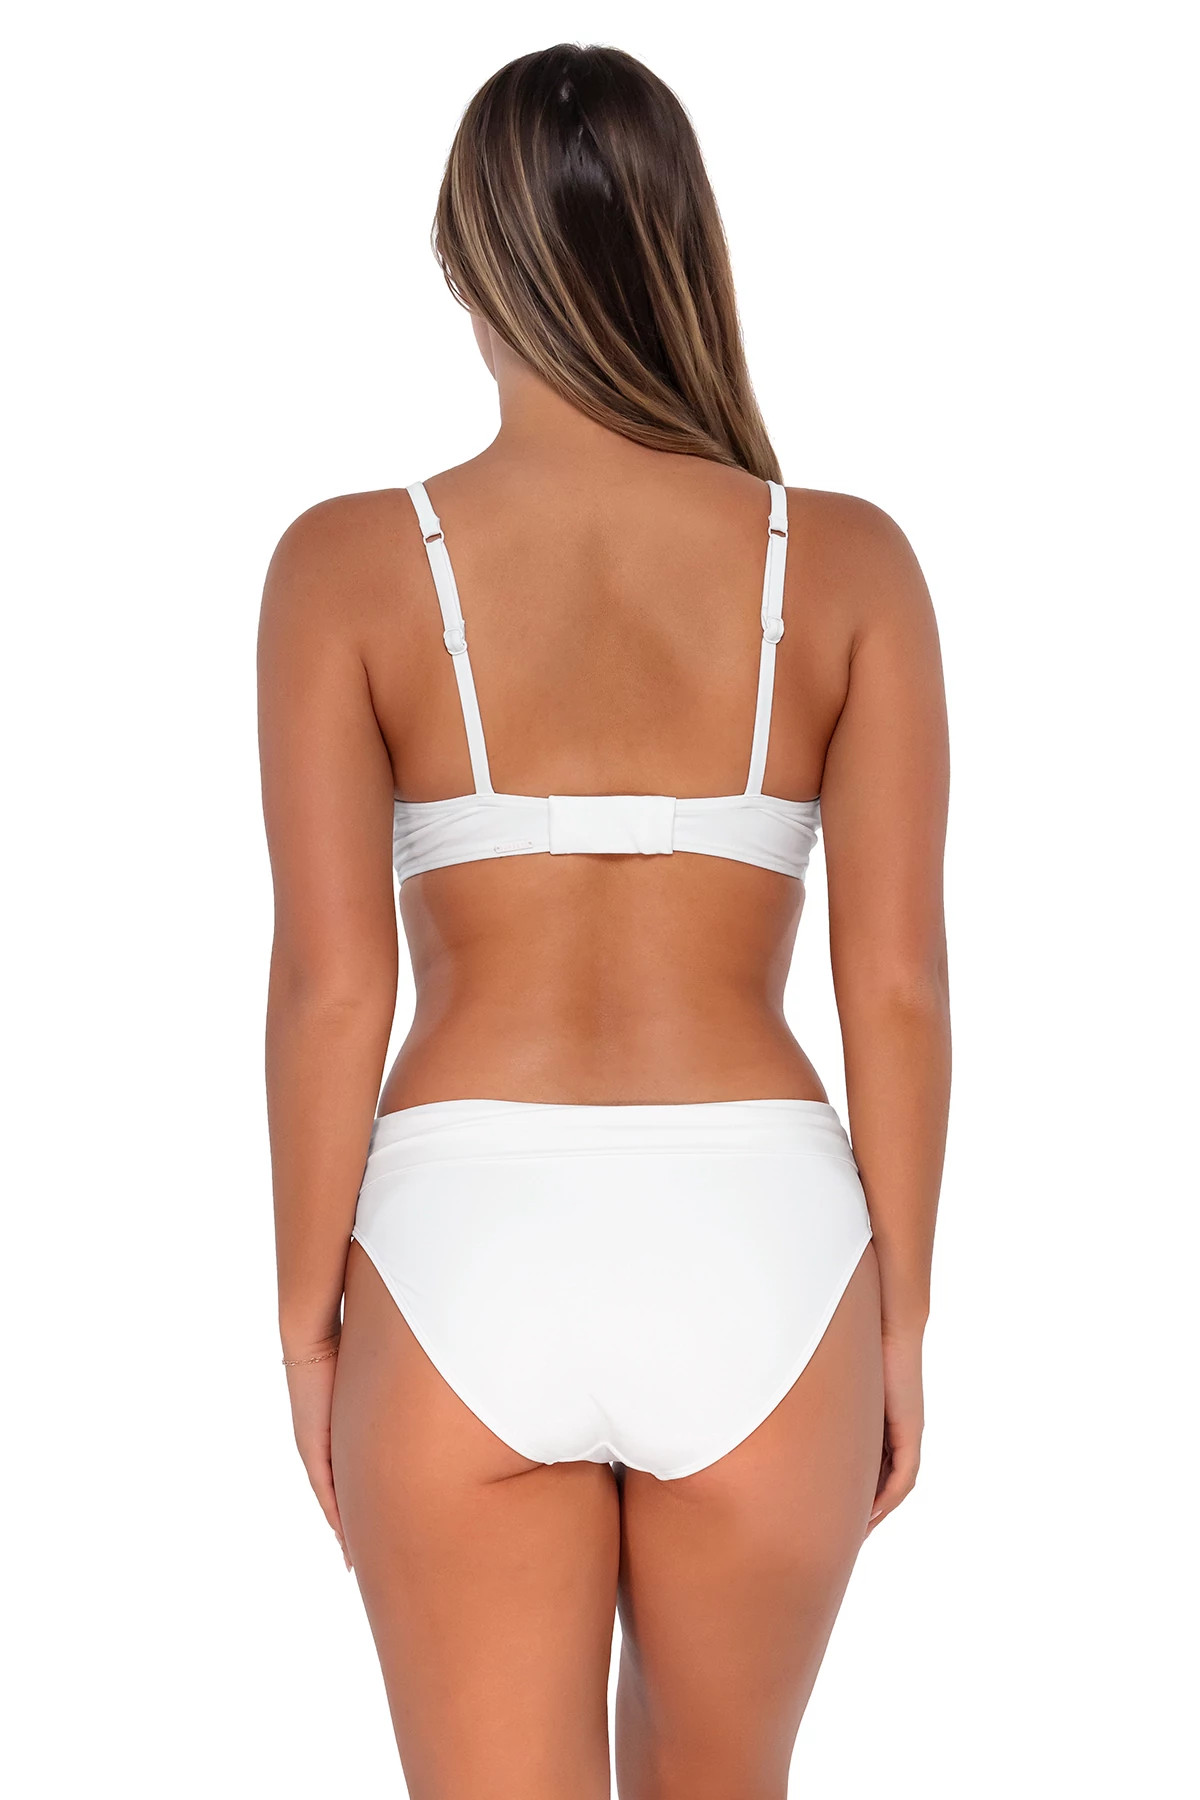 WHITE LILY Kauai Keyhole Bralette Bikini Top (E-H Cup) image number 2